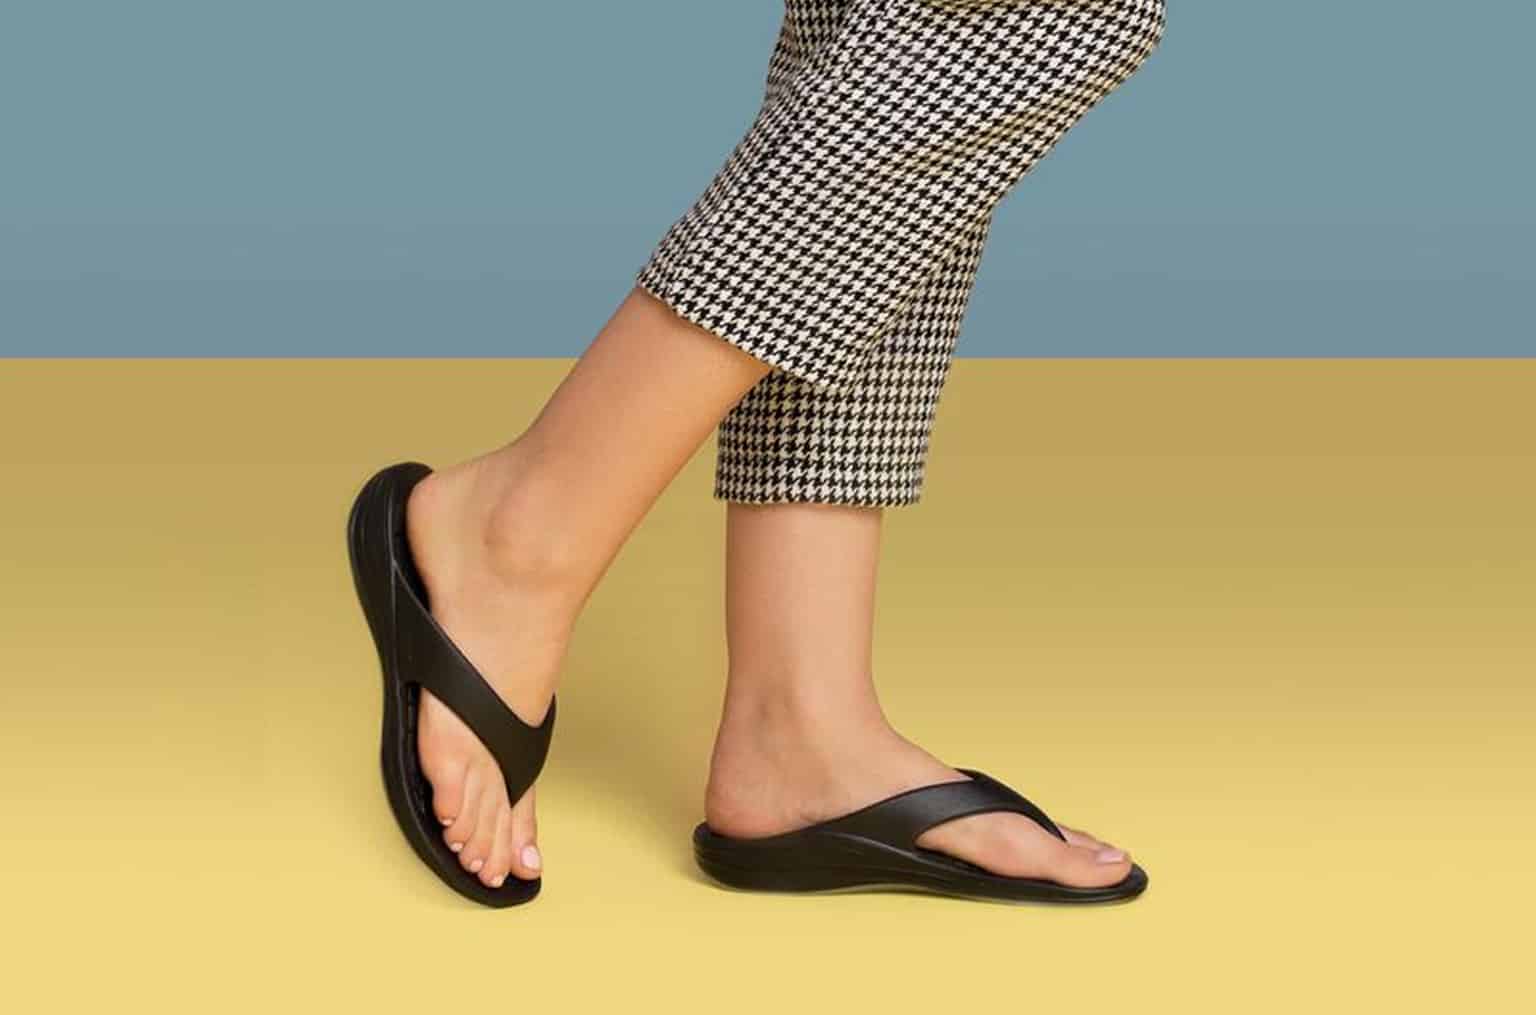 aetrex flip flops